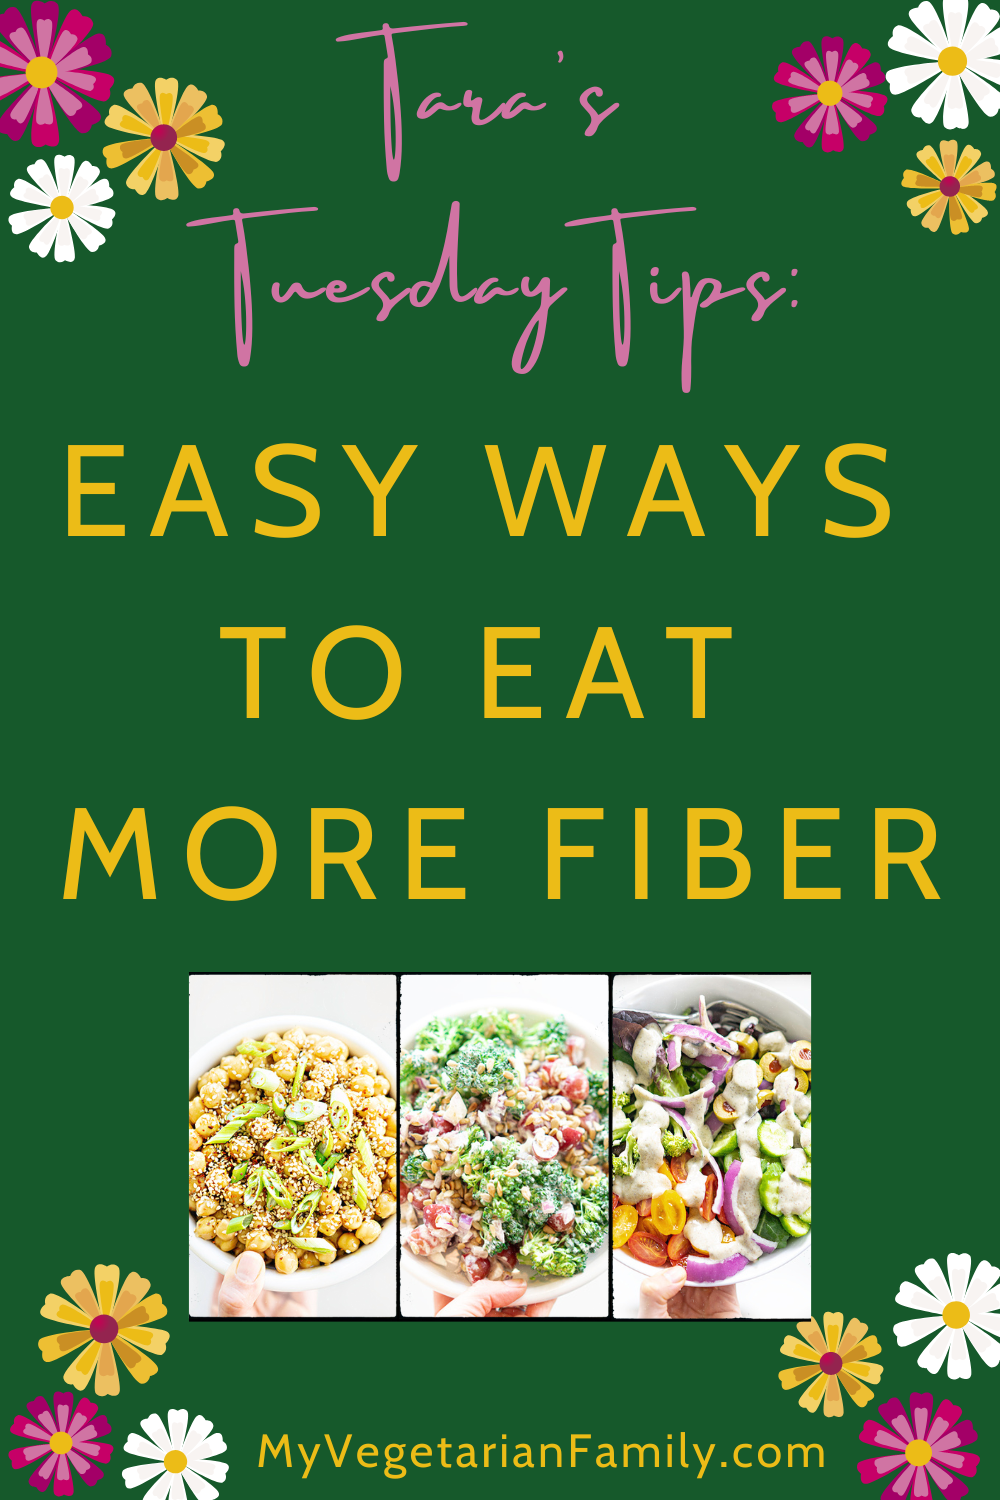 Easy Ways to Eat More Fiber | My Vegetarian Family | Tara's Tuesday Tips #eatmorefiber